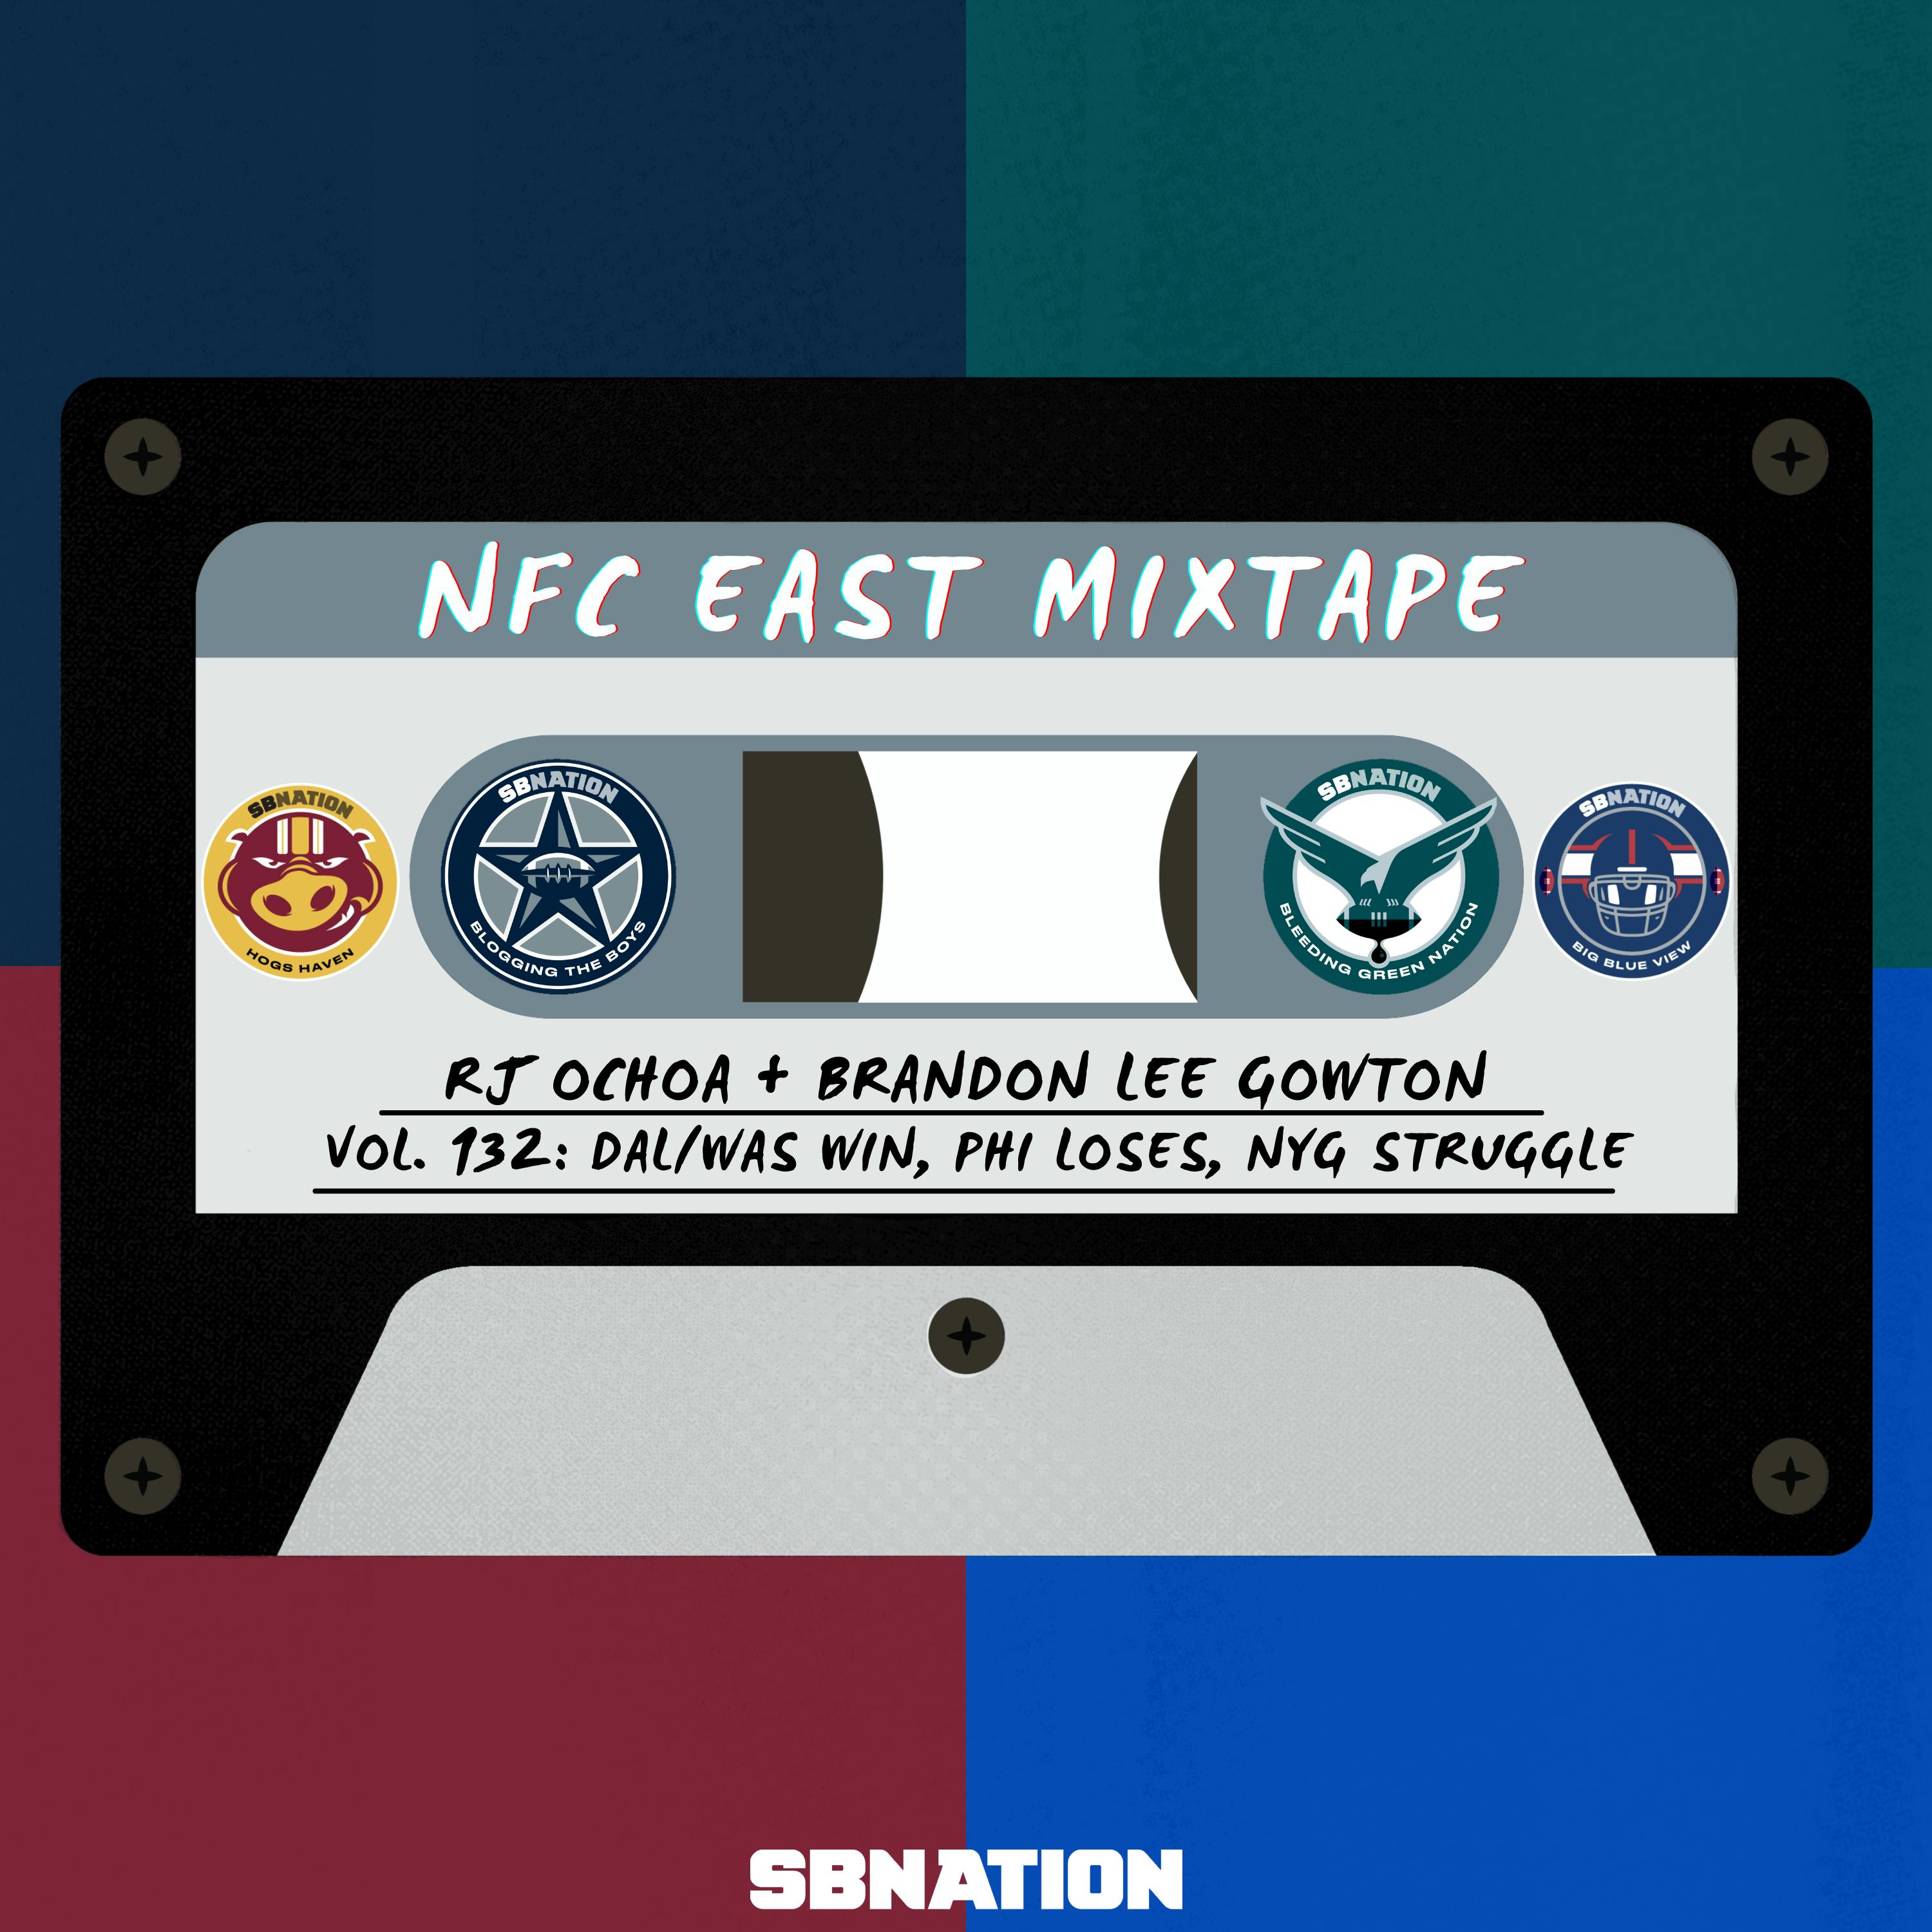 NFC East Mixtape Vol.132: Dal/Was win, Phil loses, NYG struggle